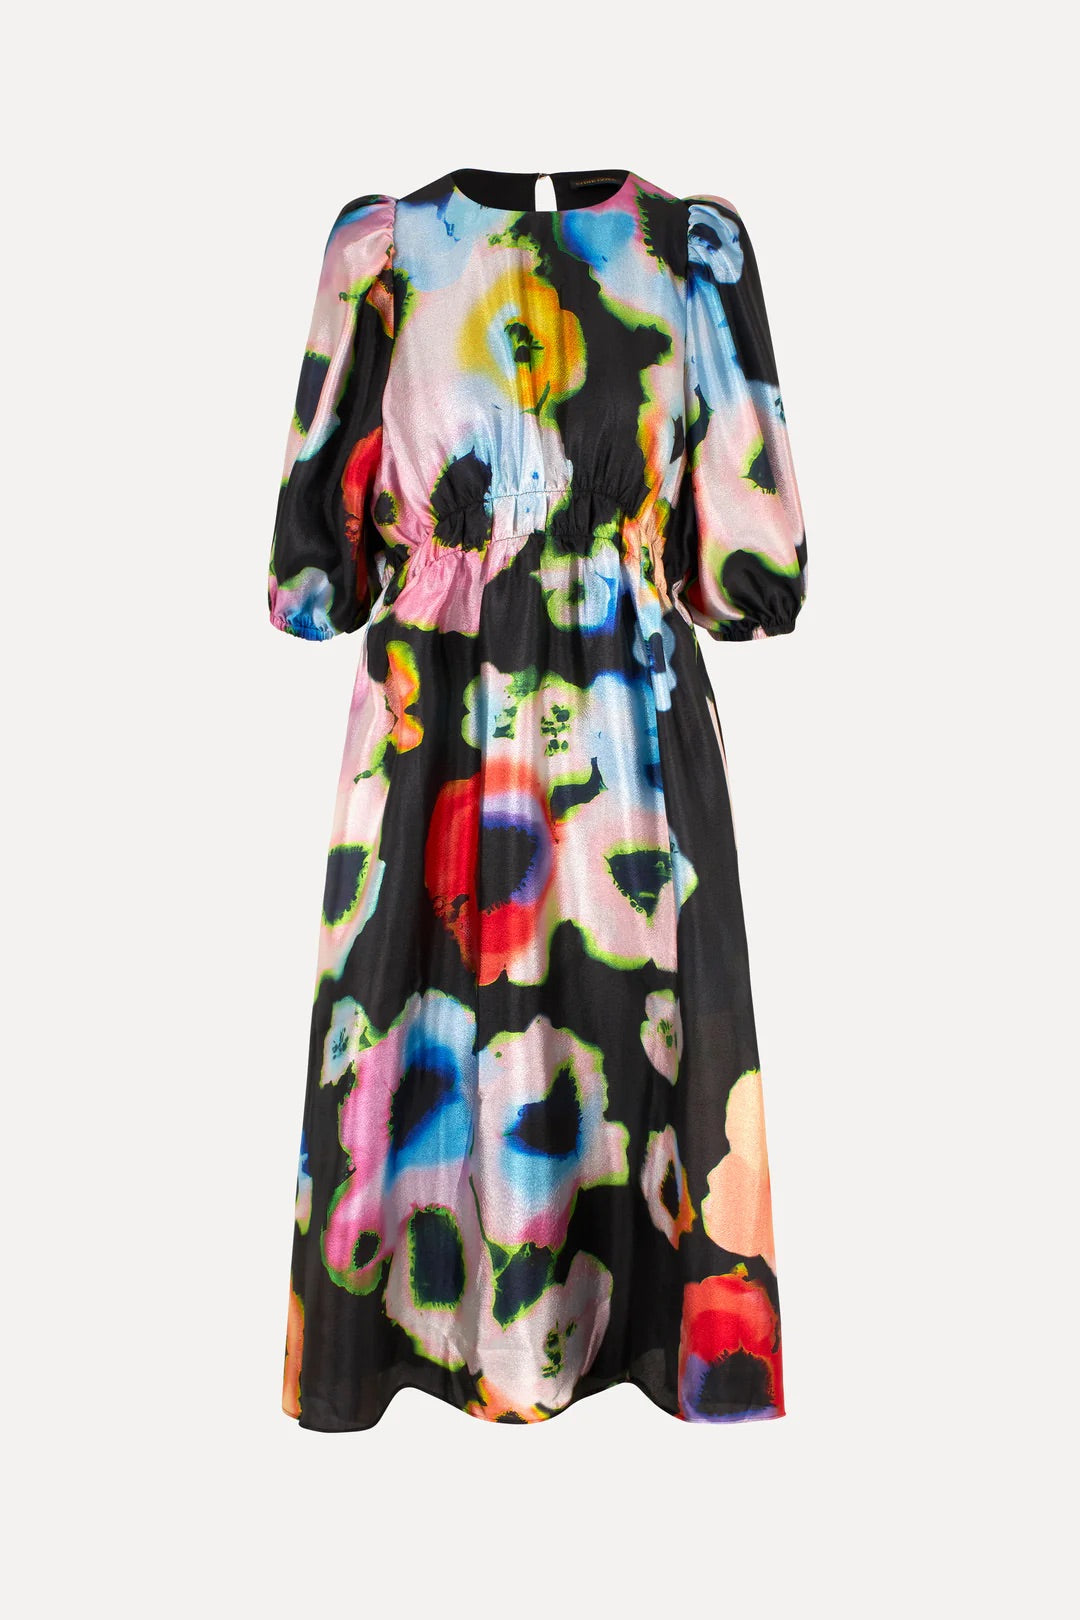 Stine Goya Elizabeth Dress - Tie Dye Floral Night